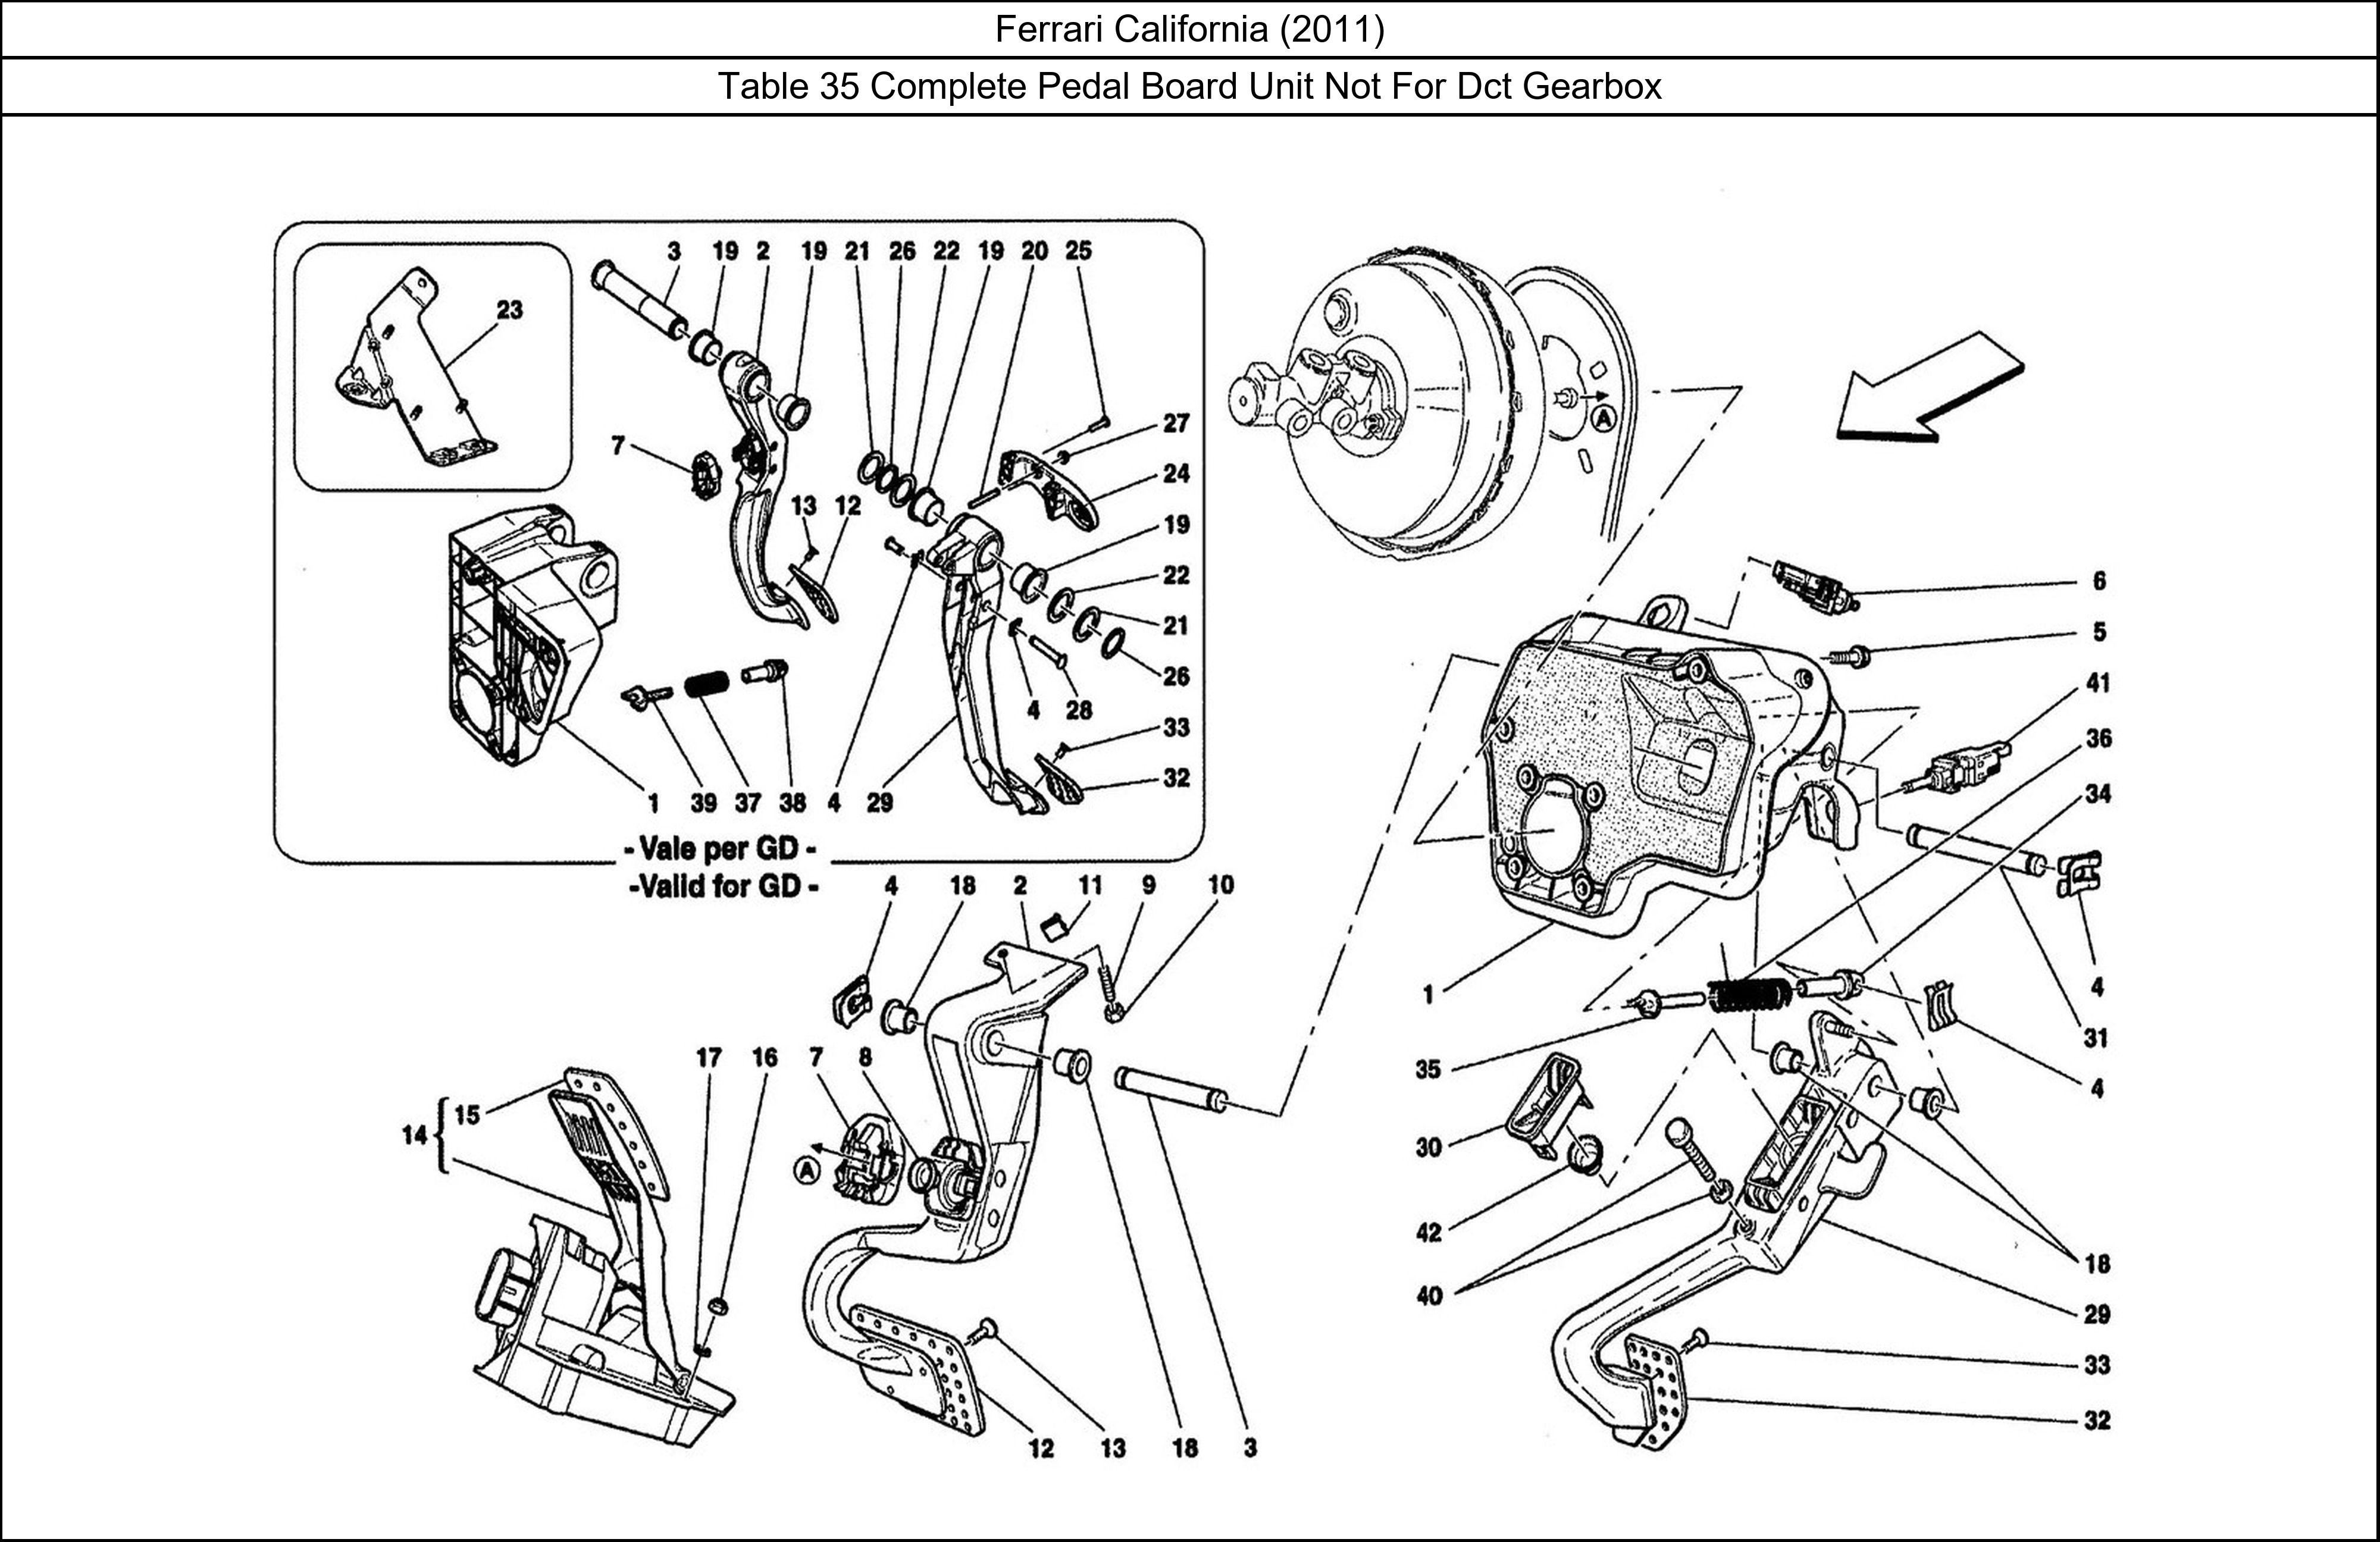 Ferrari Parts Ferrari California (2011) Table 35 Complete Pedal Board Unit Not For Dct Gearbox